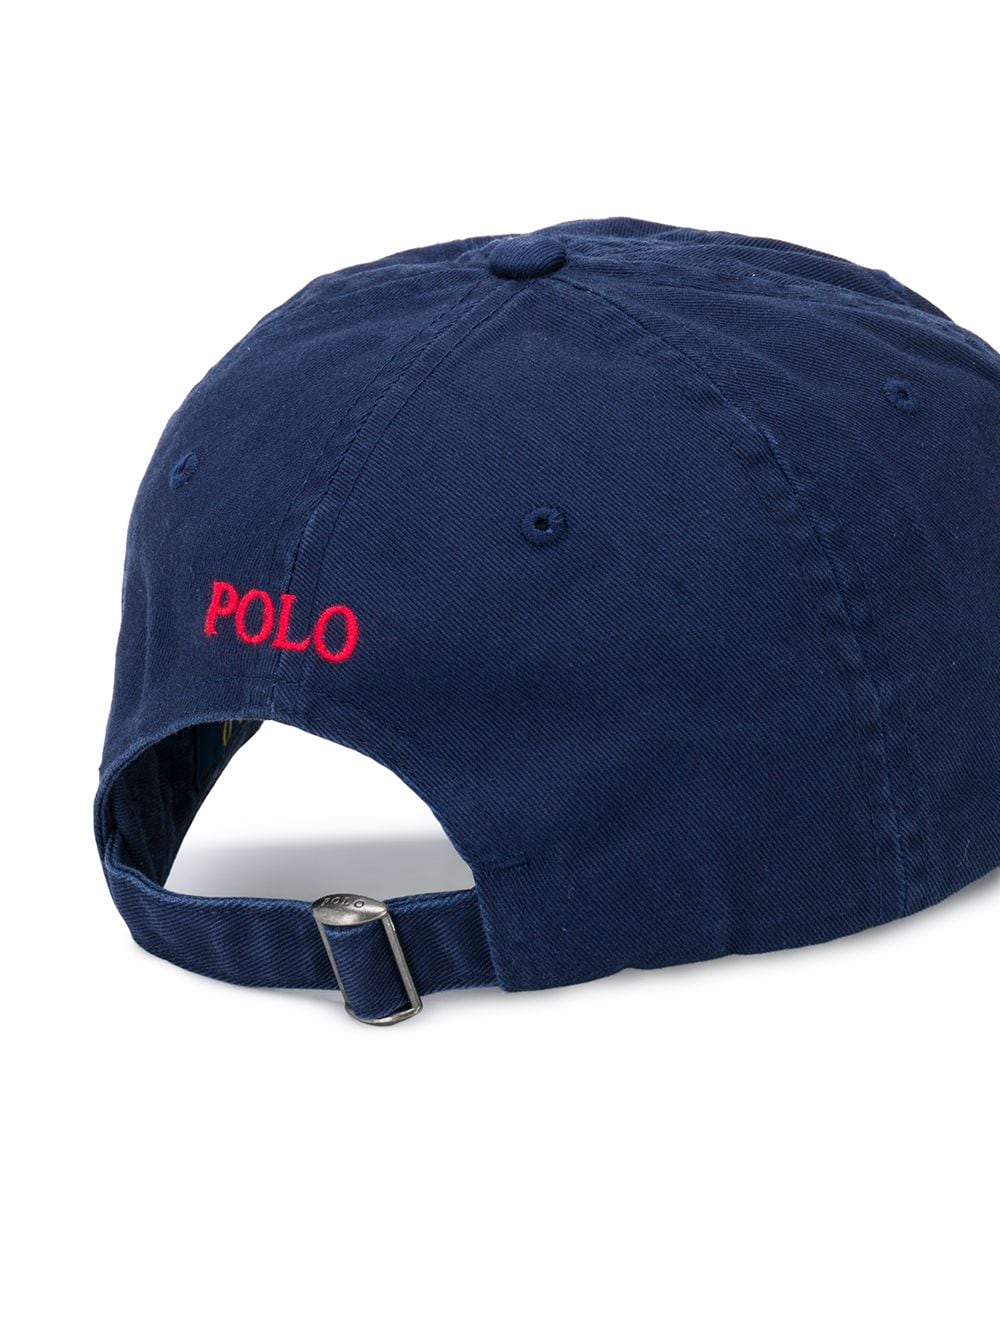 Shop Polo Ralph Lauren embroidered logo baseball cap with Express ...